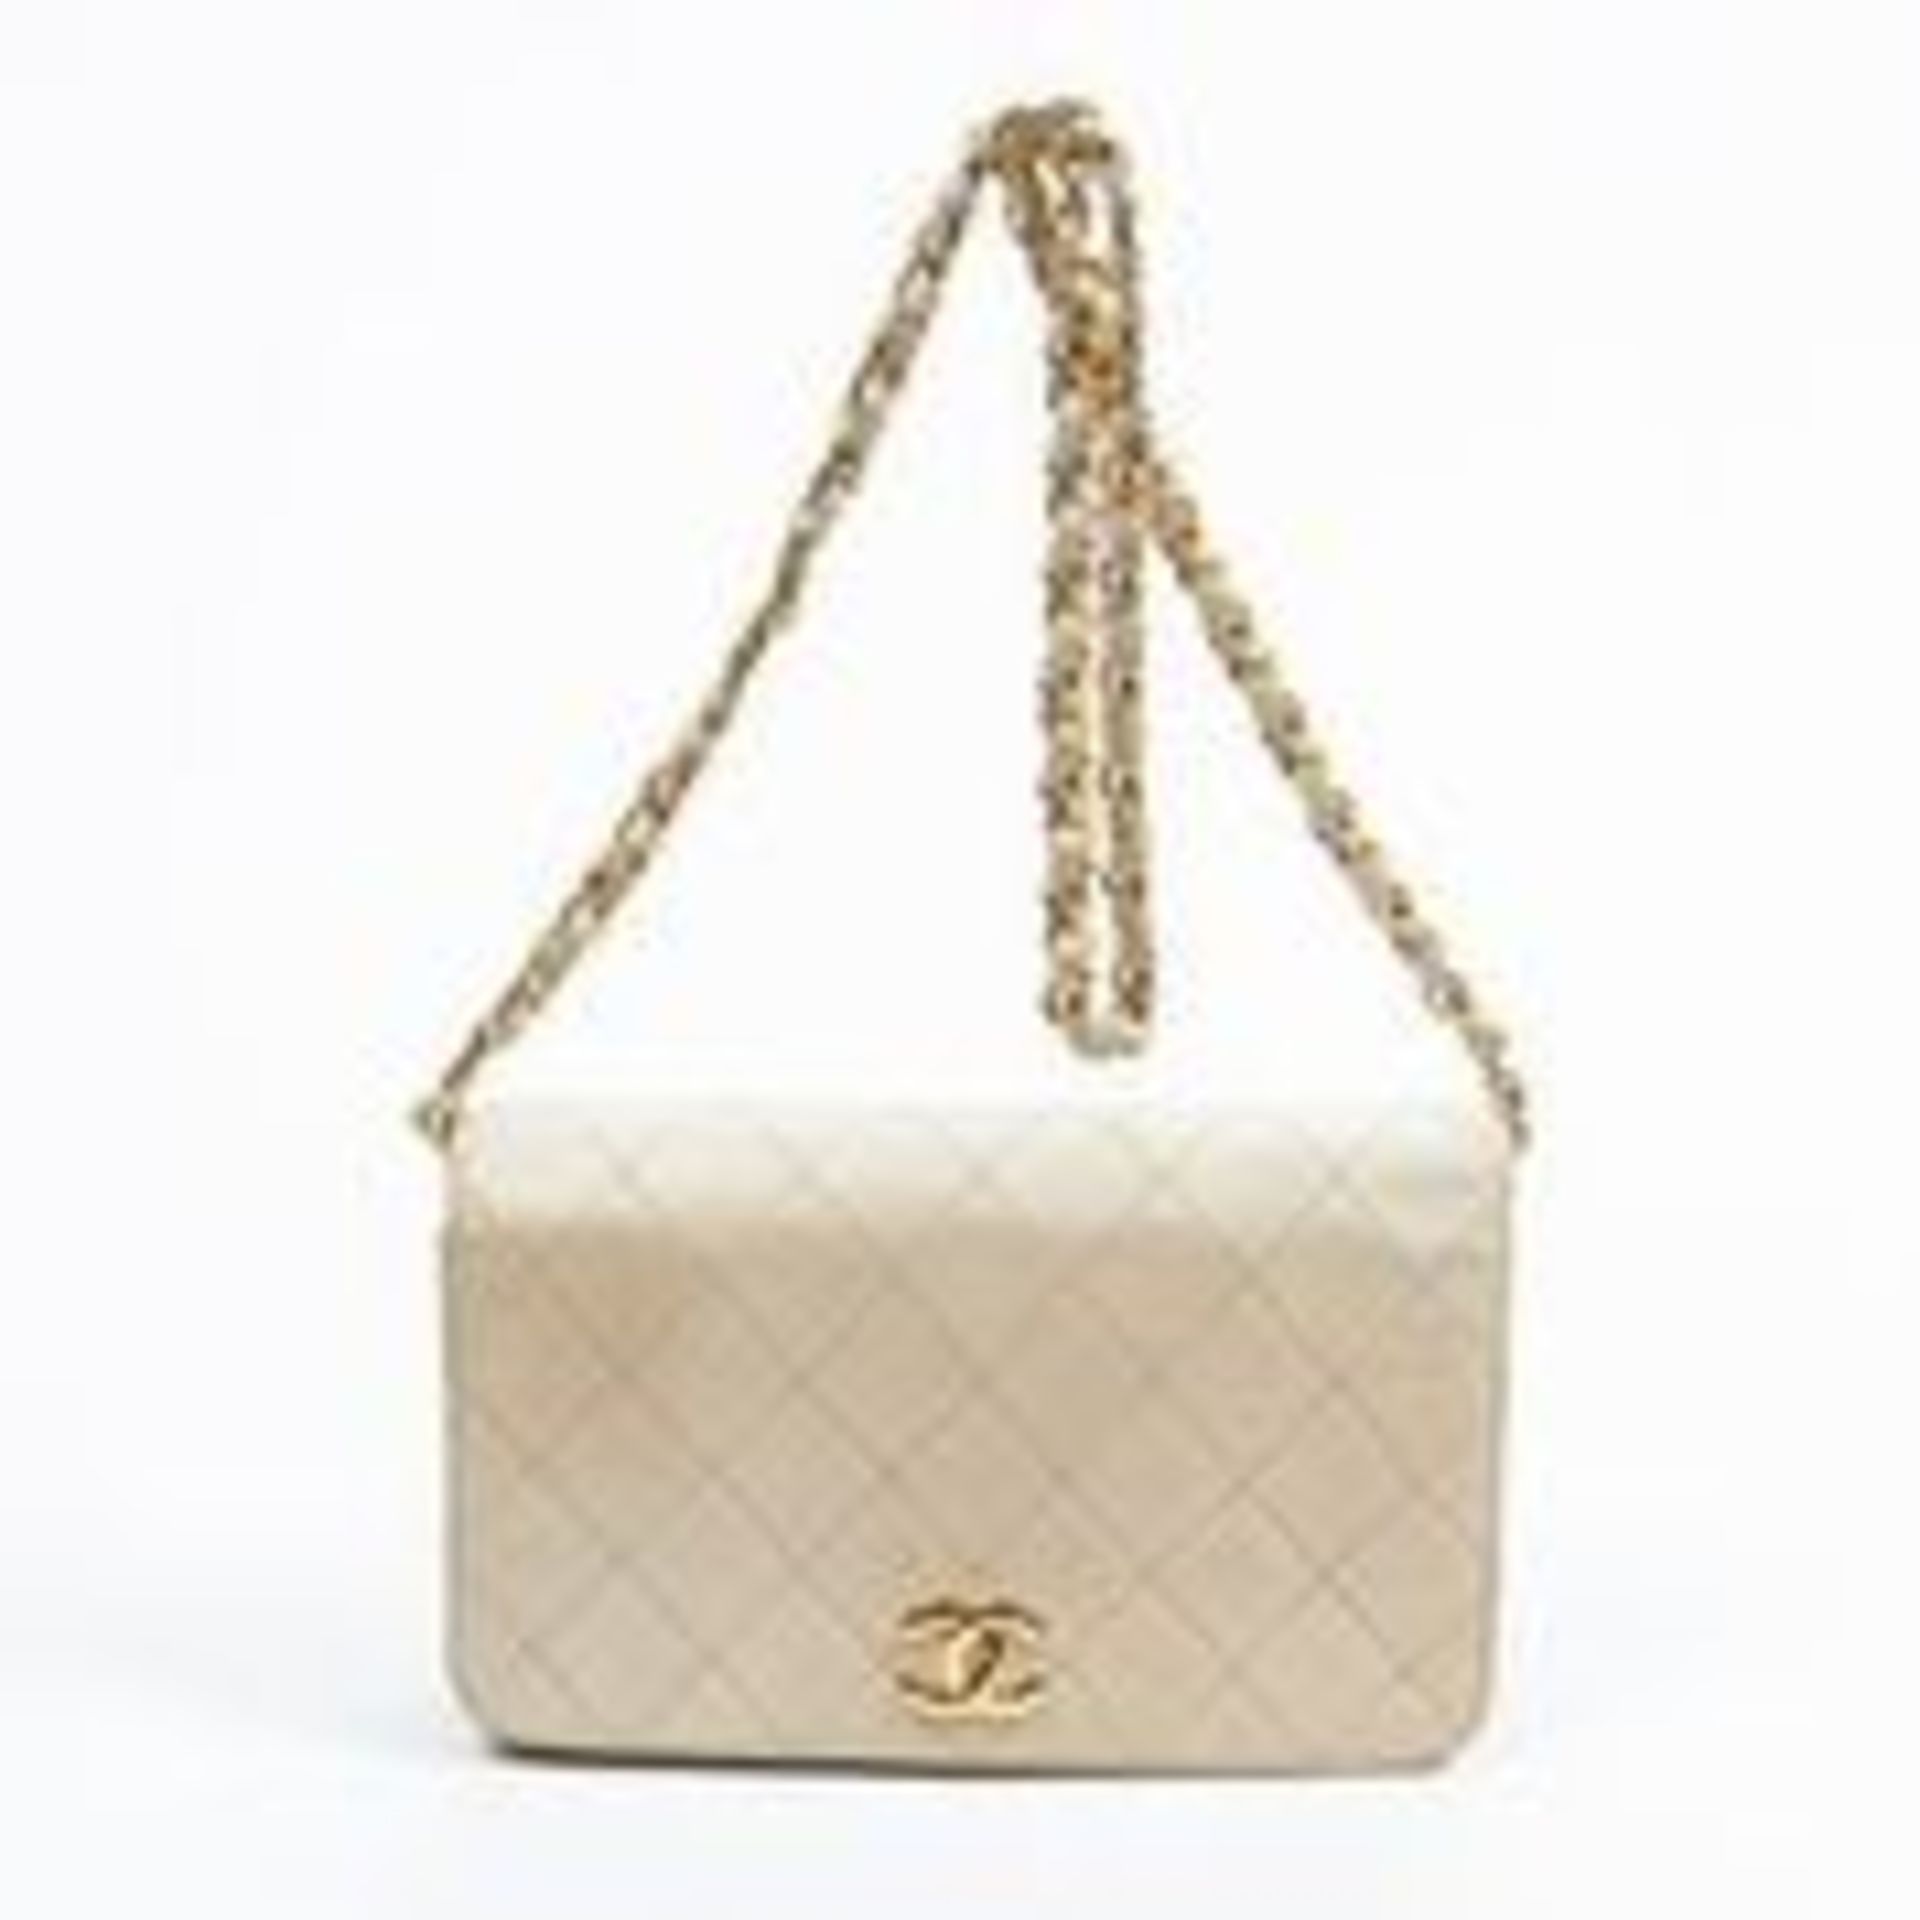 RRP £3,290 Chanel Mademoiselle Full Flap Shoulder Bag Beige - AAR4120 - Grade A - Please Contact